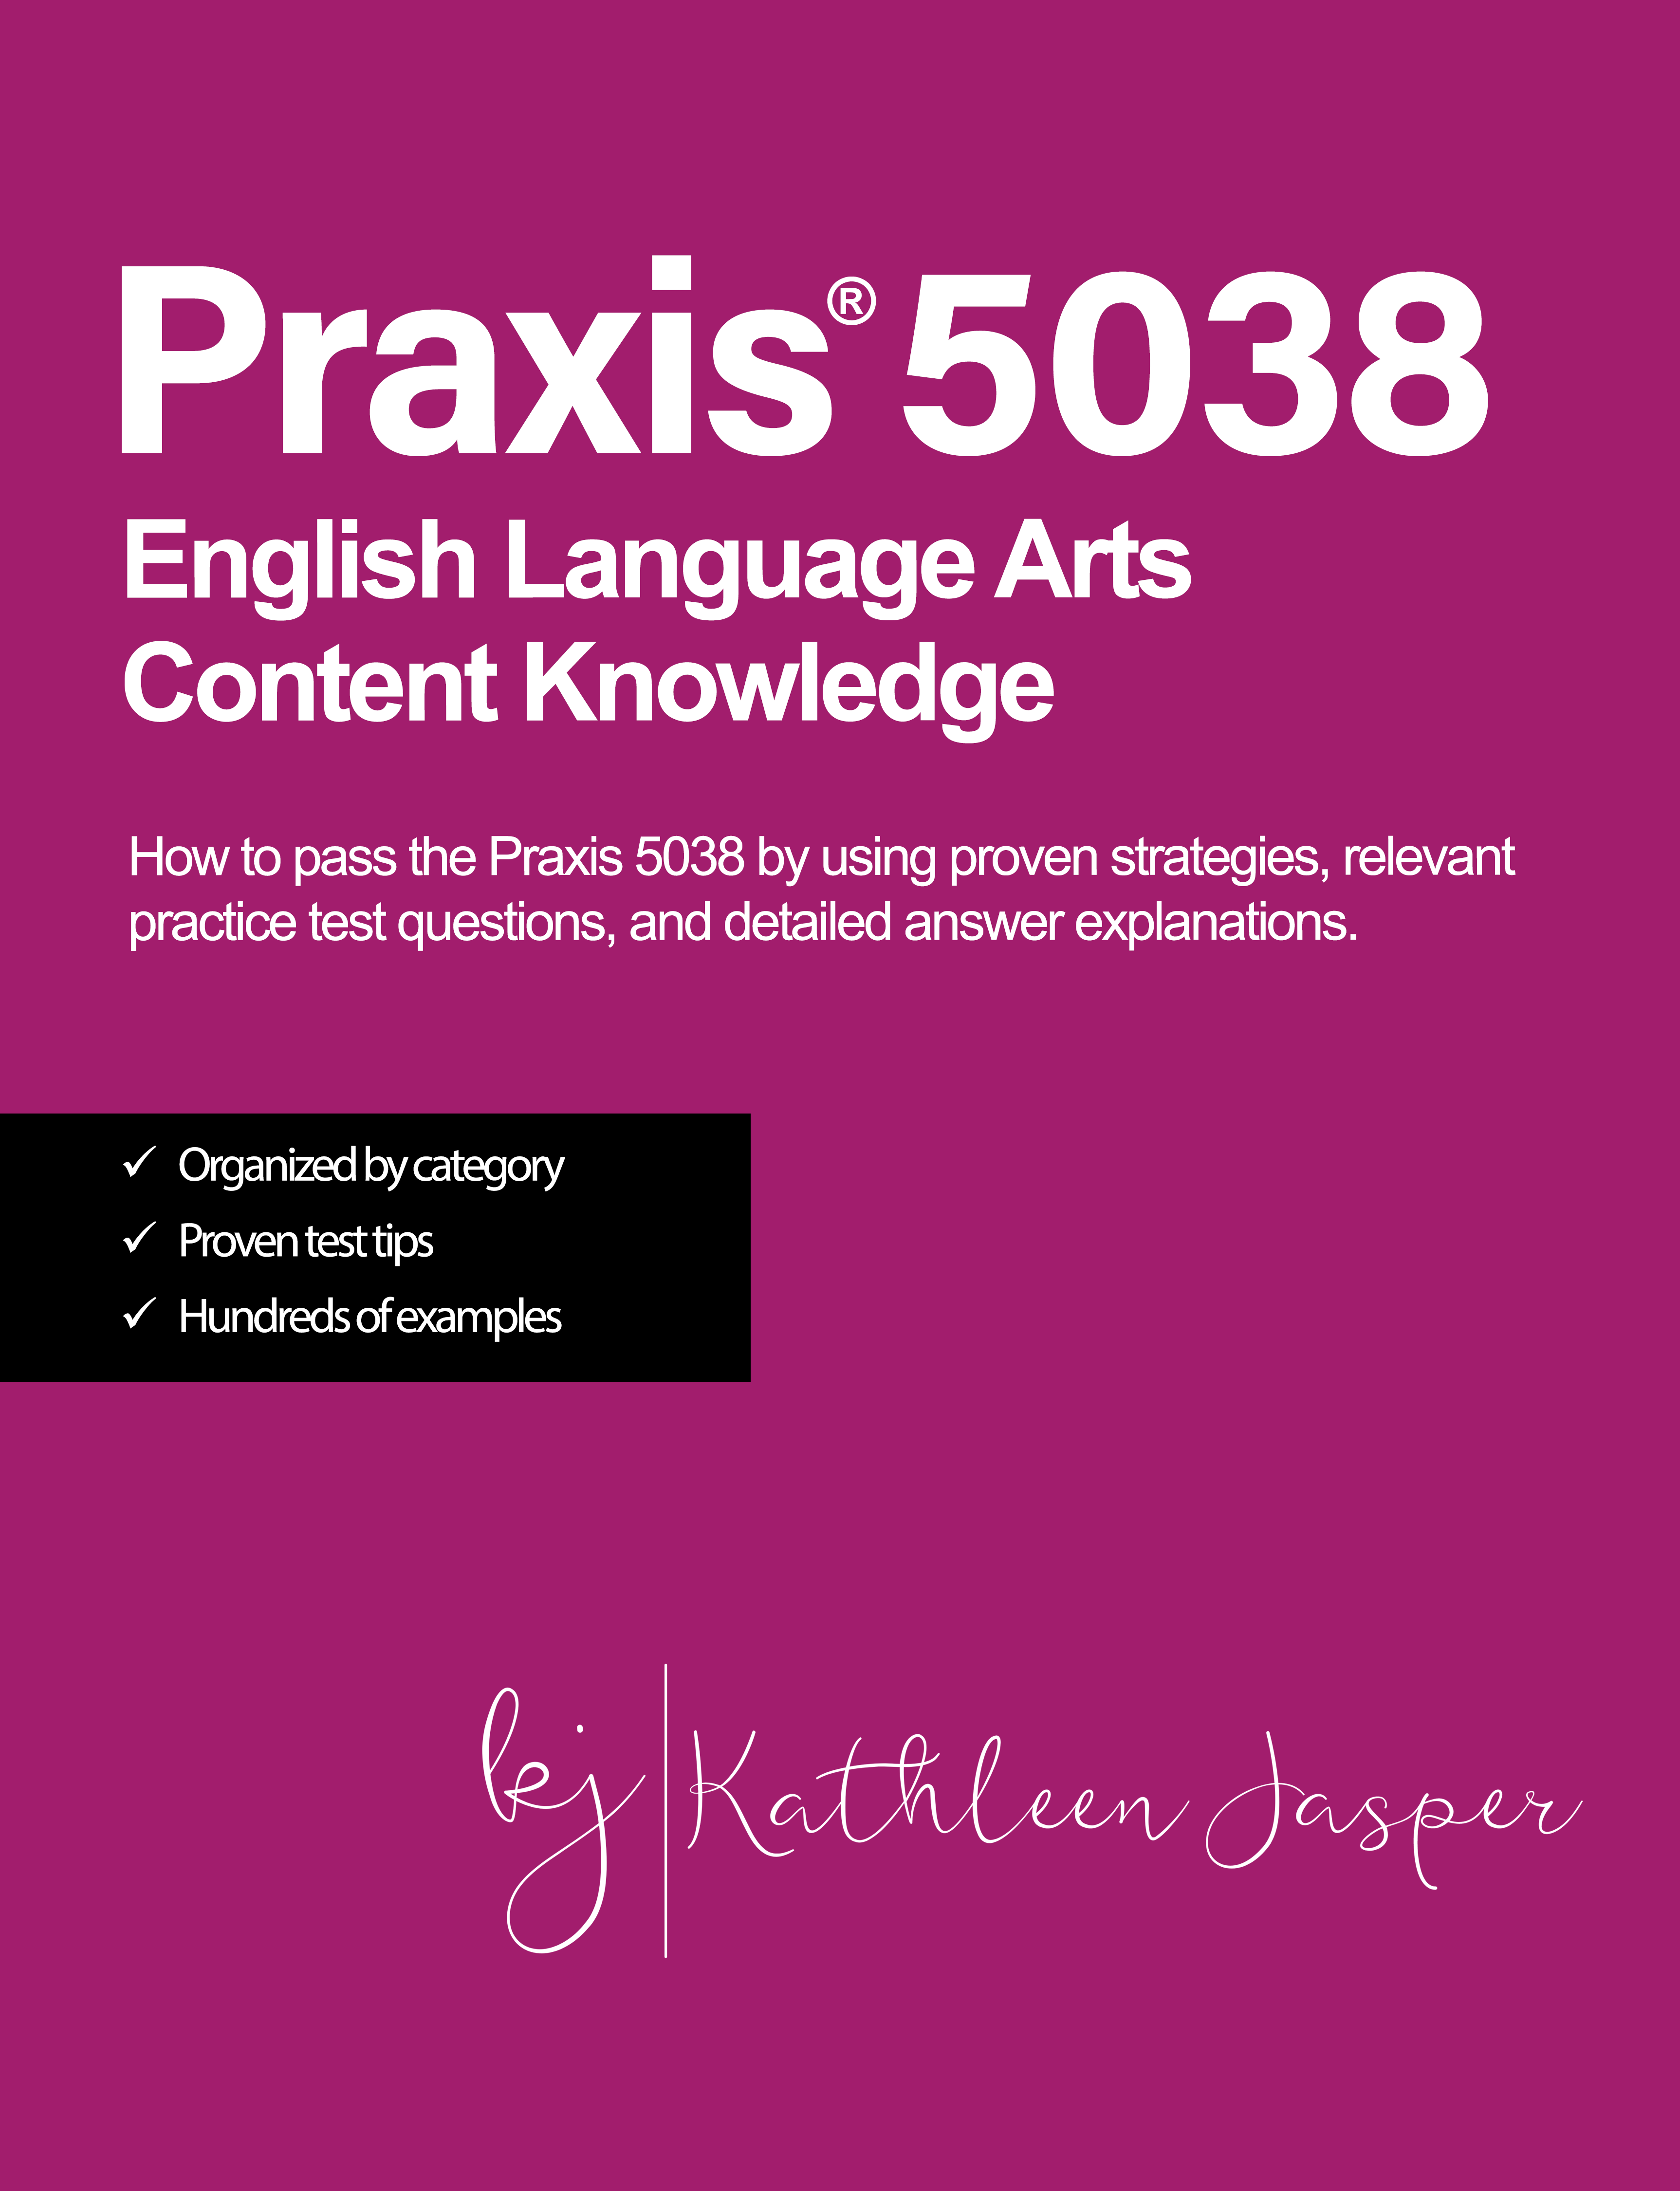 Lang　Dg　Knowledge　–　Praxis　Arts　Eng　Guide　KathleenJasper　5038　Content